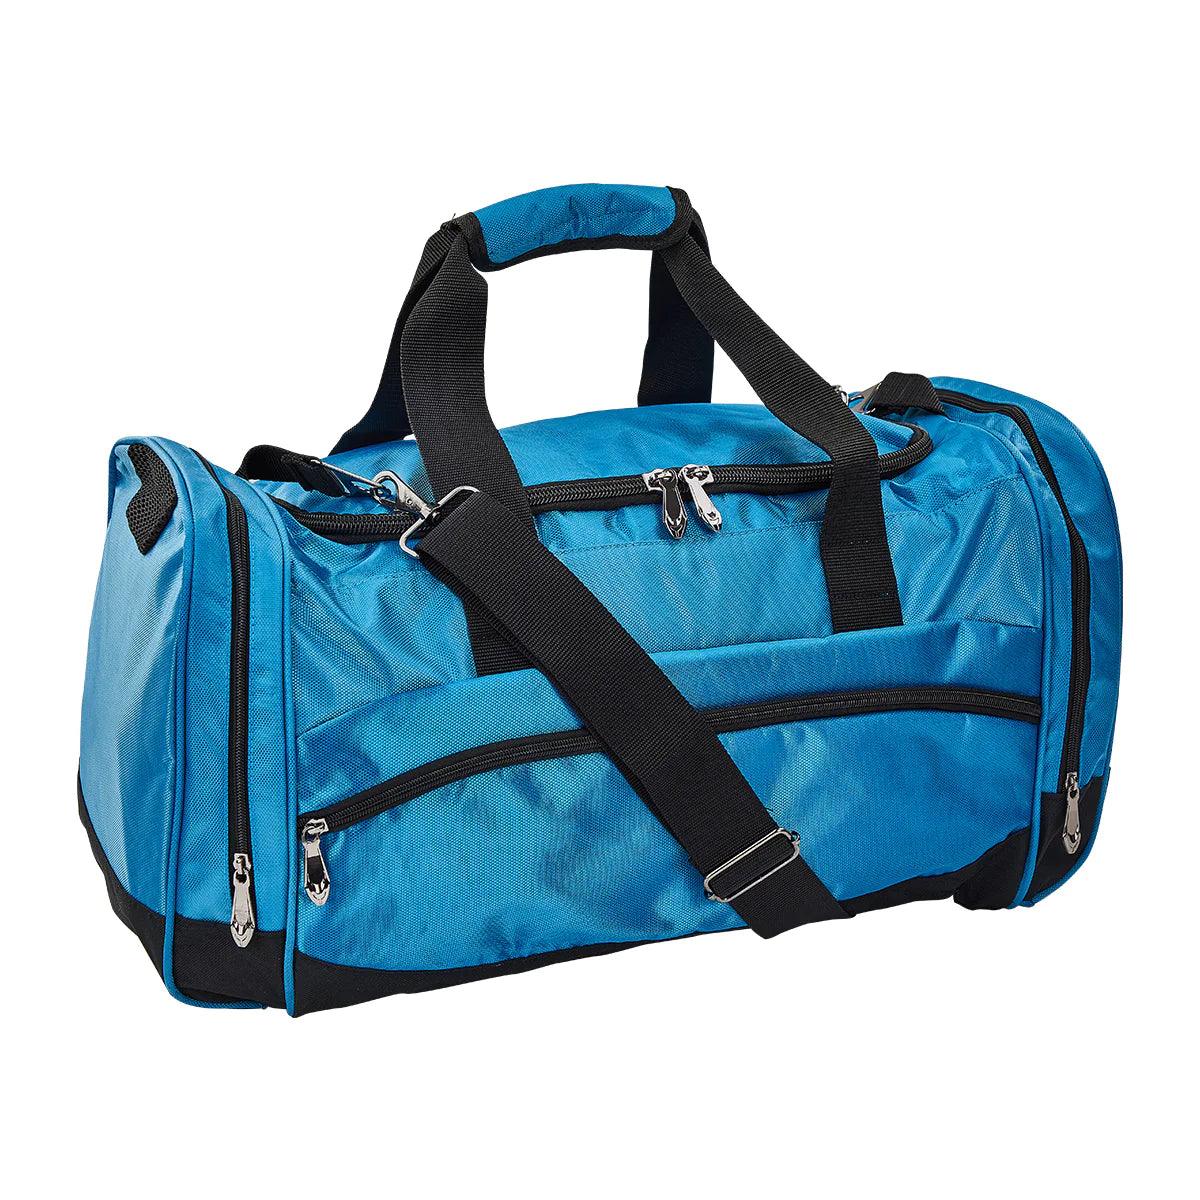 Premium Sport Bag - Black or Blue - Medium Size - Violent Art Shop